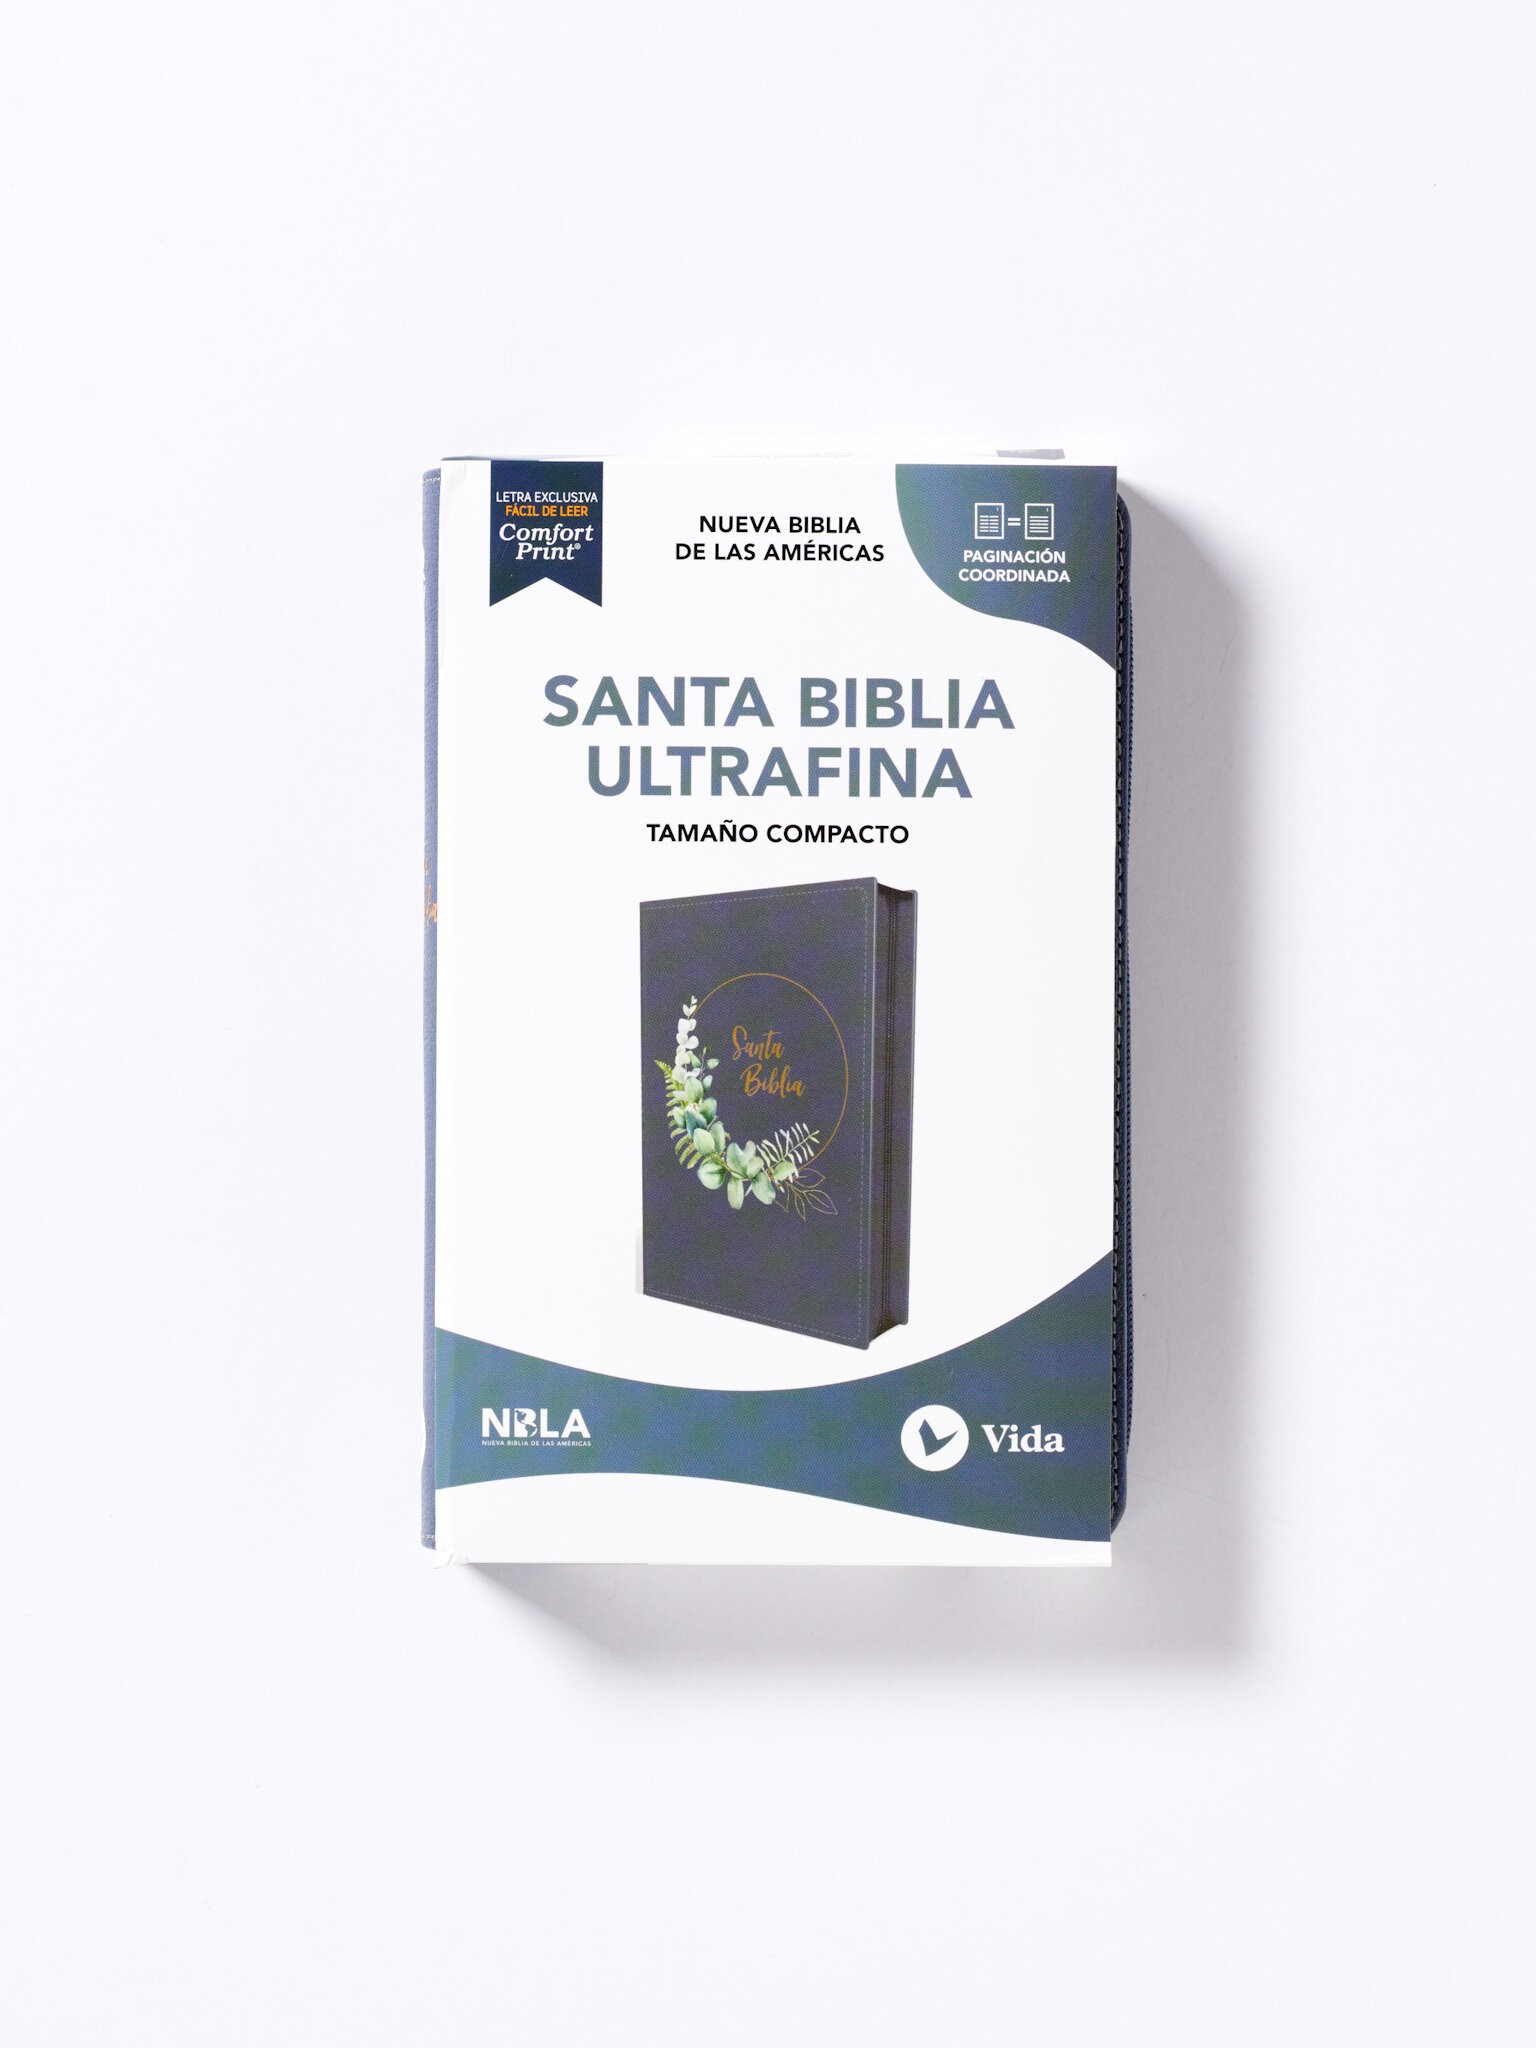 Ultrafina compacta grisácea box.JPG